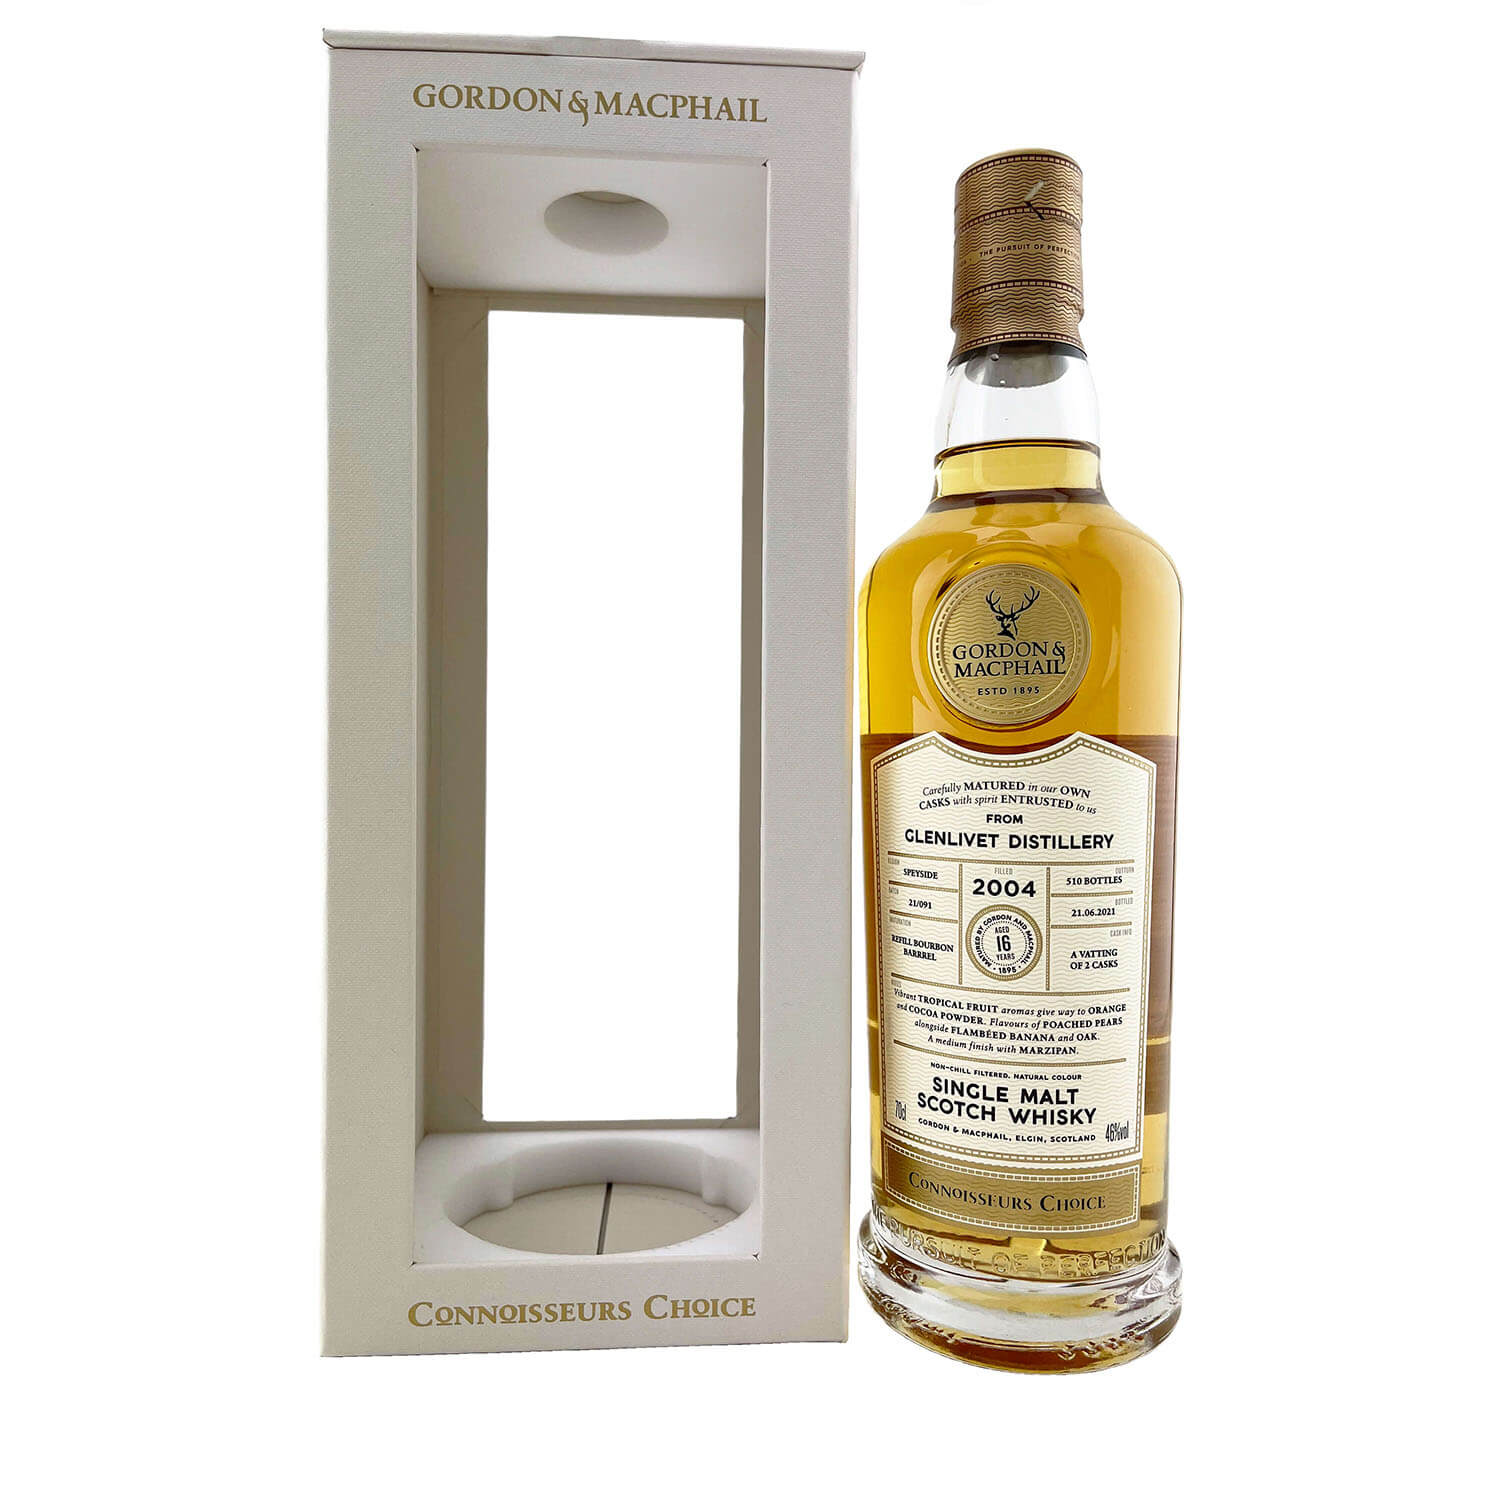 Gordon & MacPhail ‘Connoisseurs Choice’ 2004 Glenlivet Distillery 16 Year Old 700ml